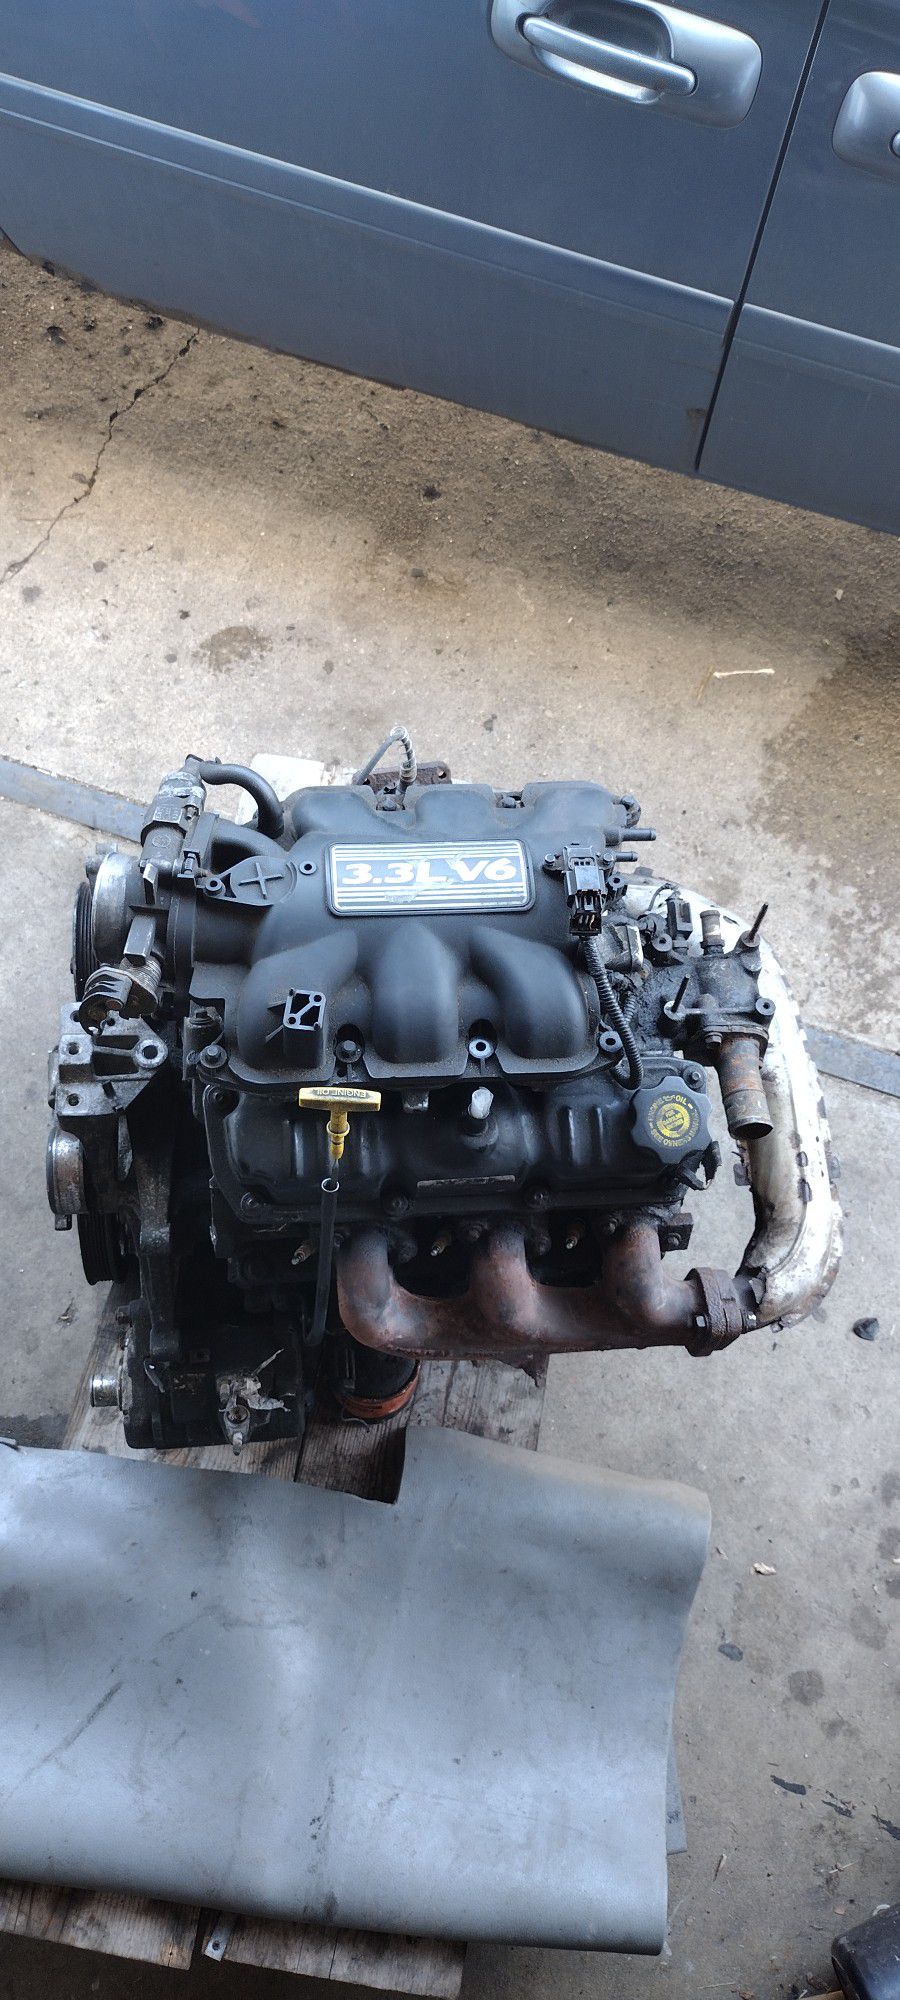 Dodge Caravan Engine 3.3 L V6  Low Mileage Healthy Engine 